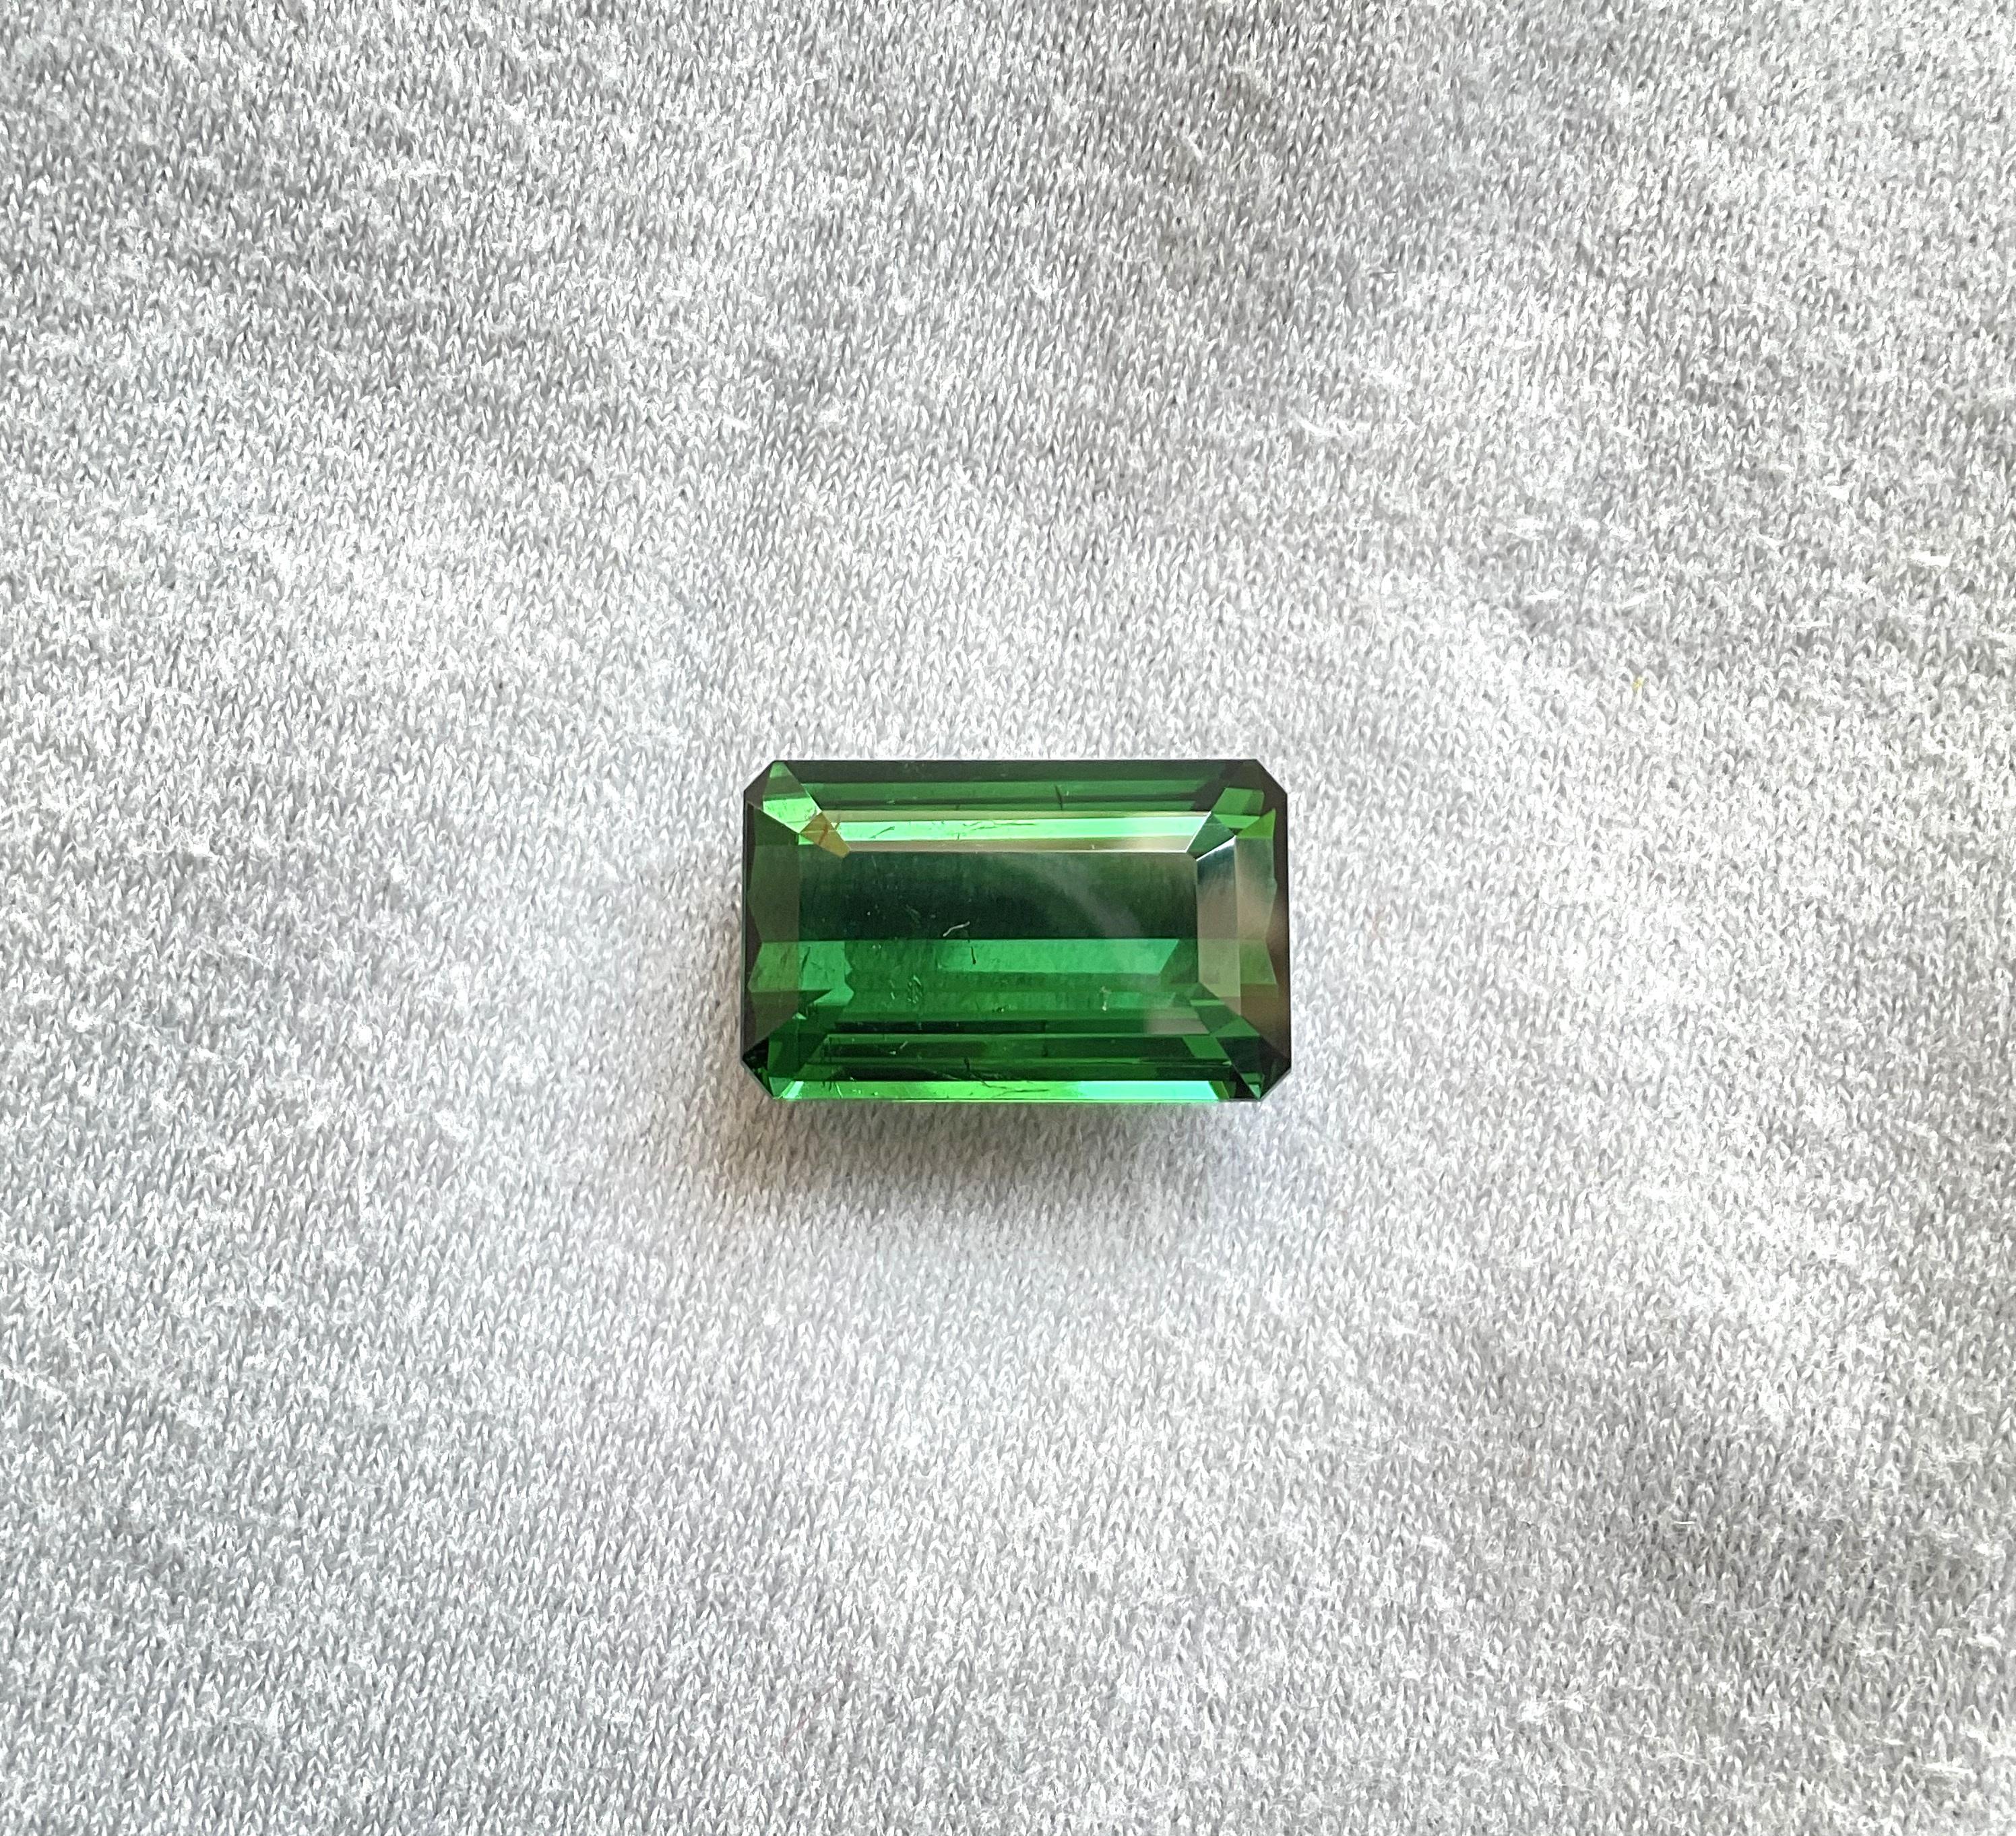 14.46 carats Nigeria green tourmaline Top Quality Octagon Cut stone natural Gem For Sale 1